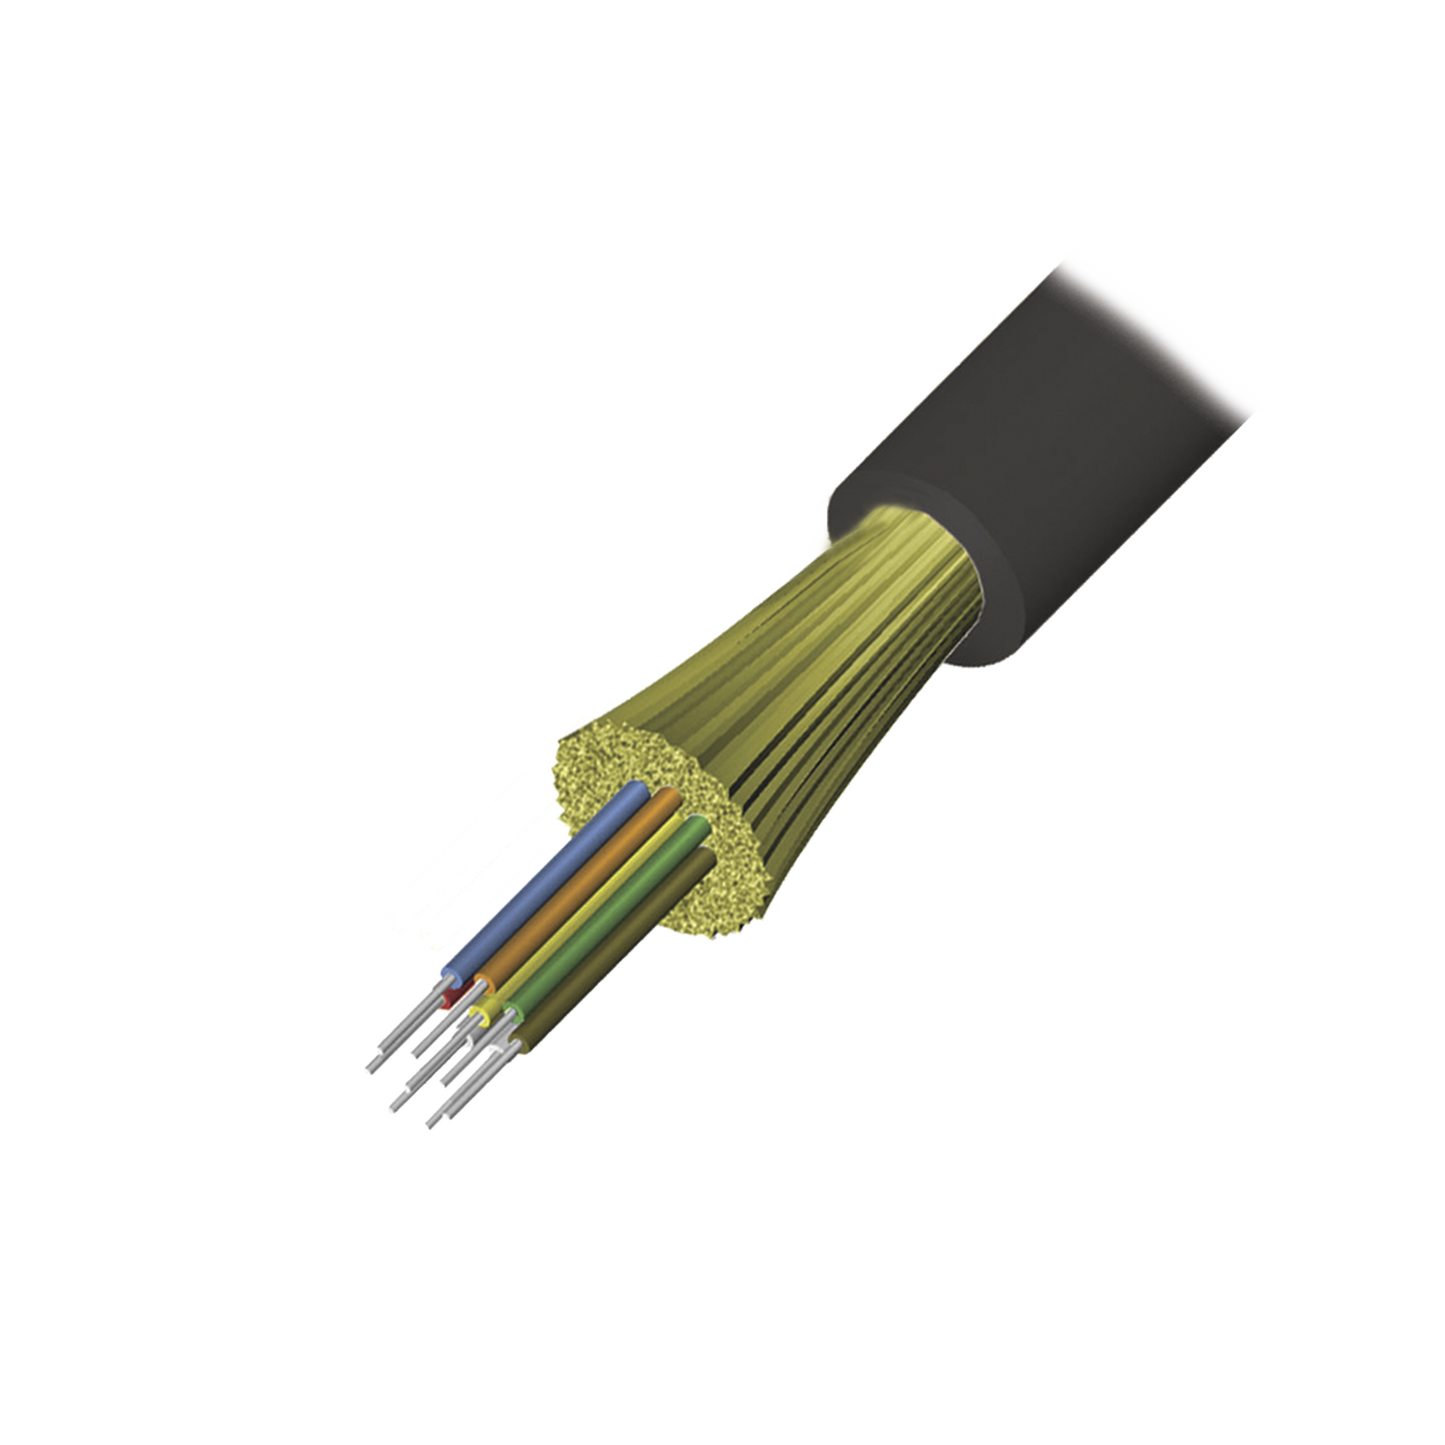 Cable de Fibra Óptica de 4 hilos, Interior/Exterior, Loose Tube, No Conductiva (Dieléctrica), LS0H, Monomodo OS1/OS2 9/125, 1 Metro